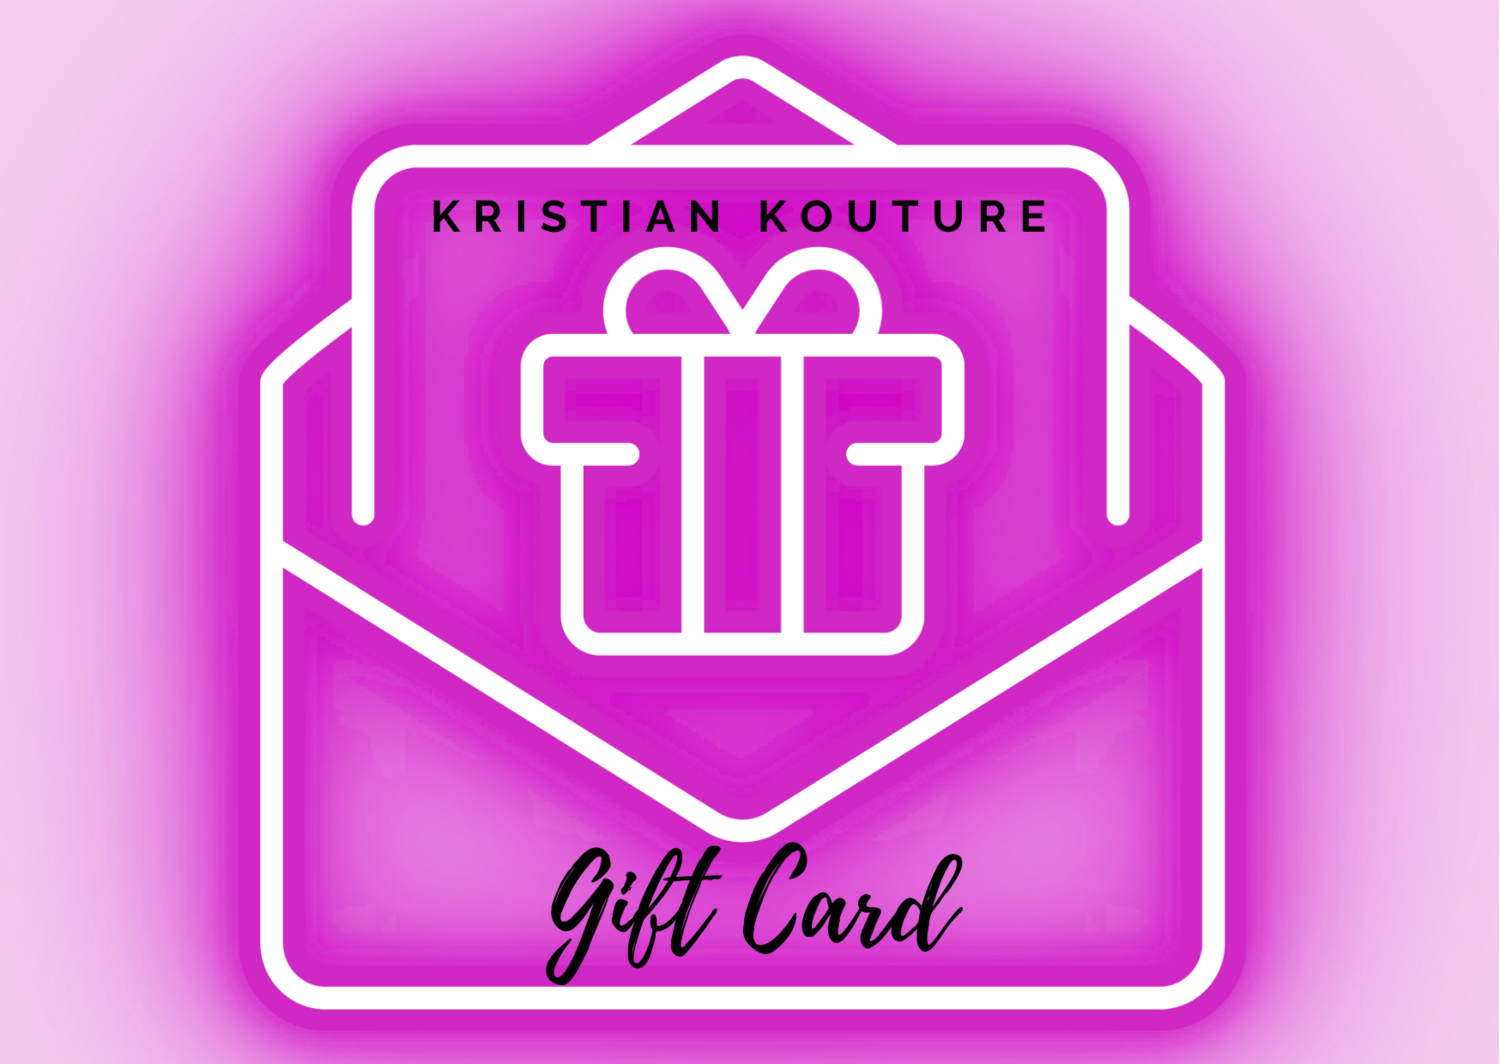 Kristian Kouture Gift Card